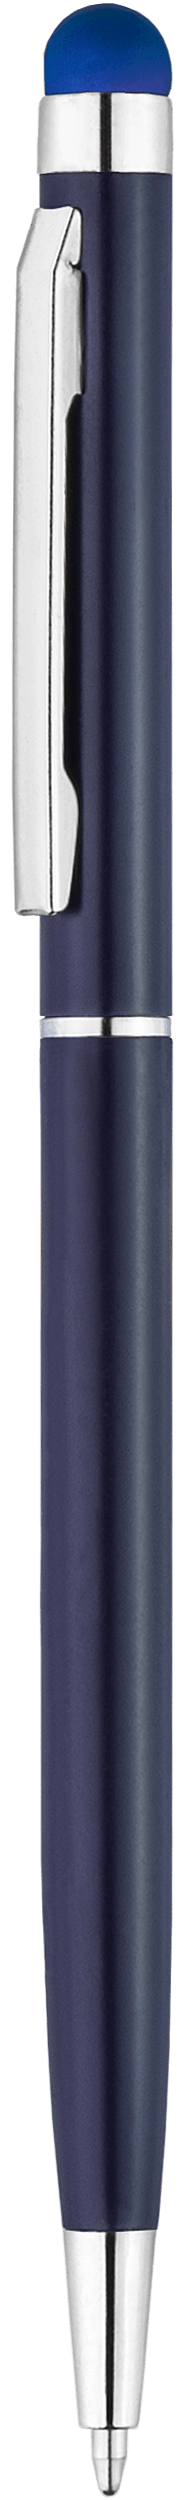 Ручка KENO NEW Темно-синяя 1117.14